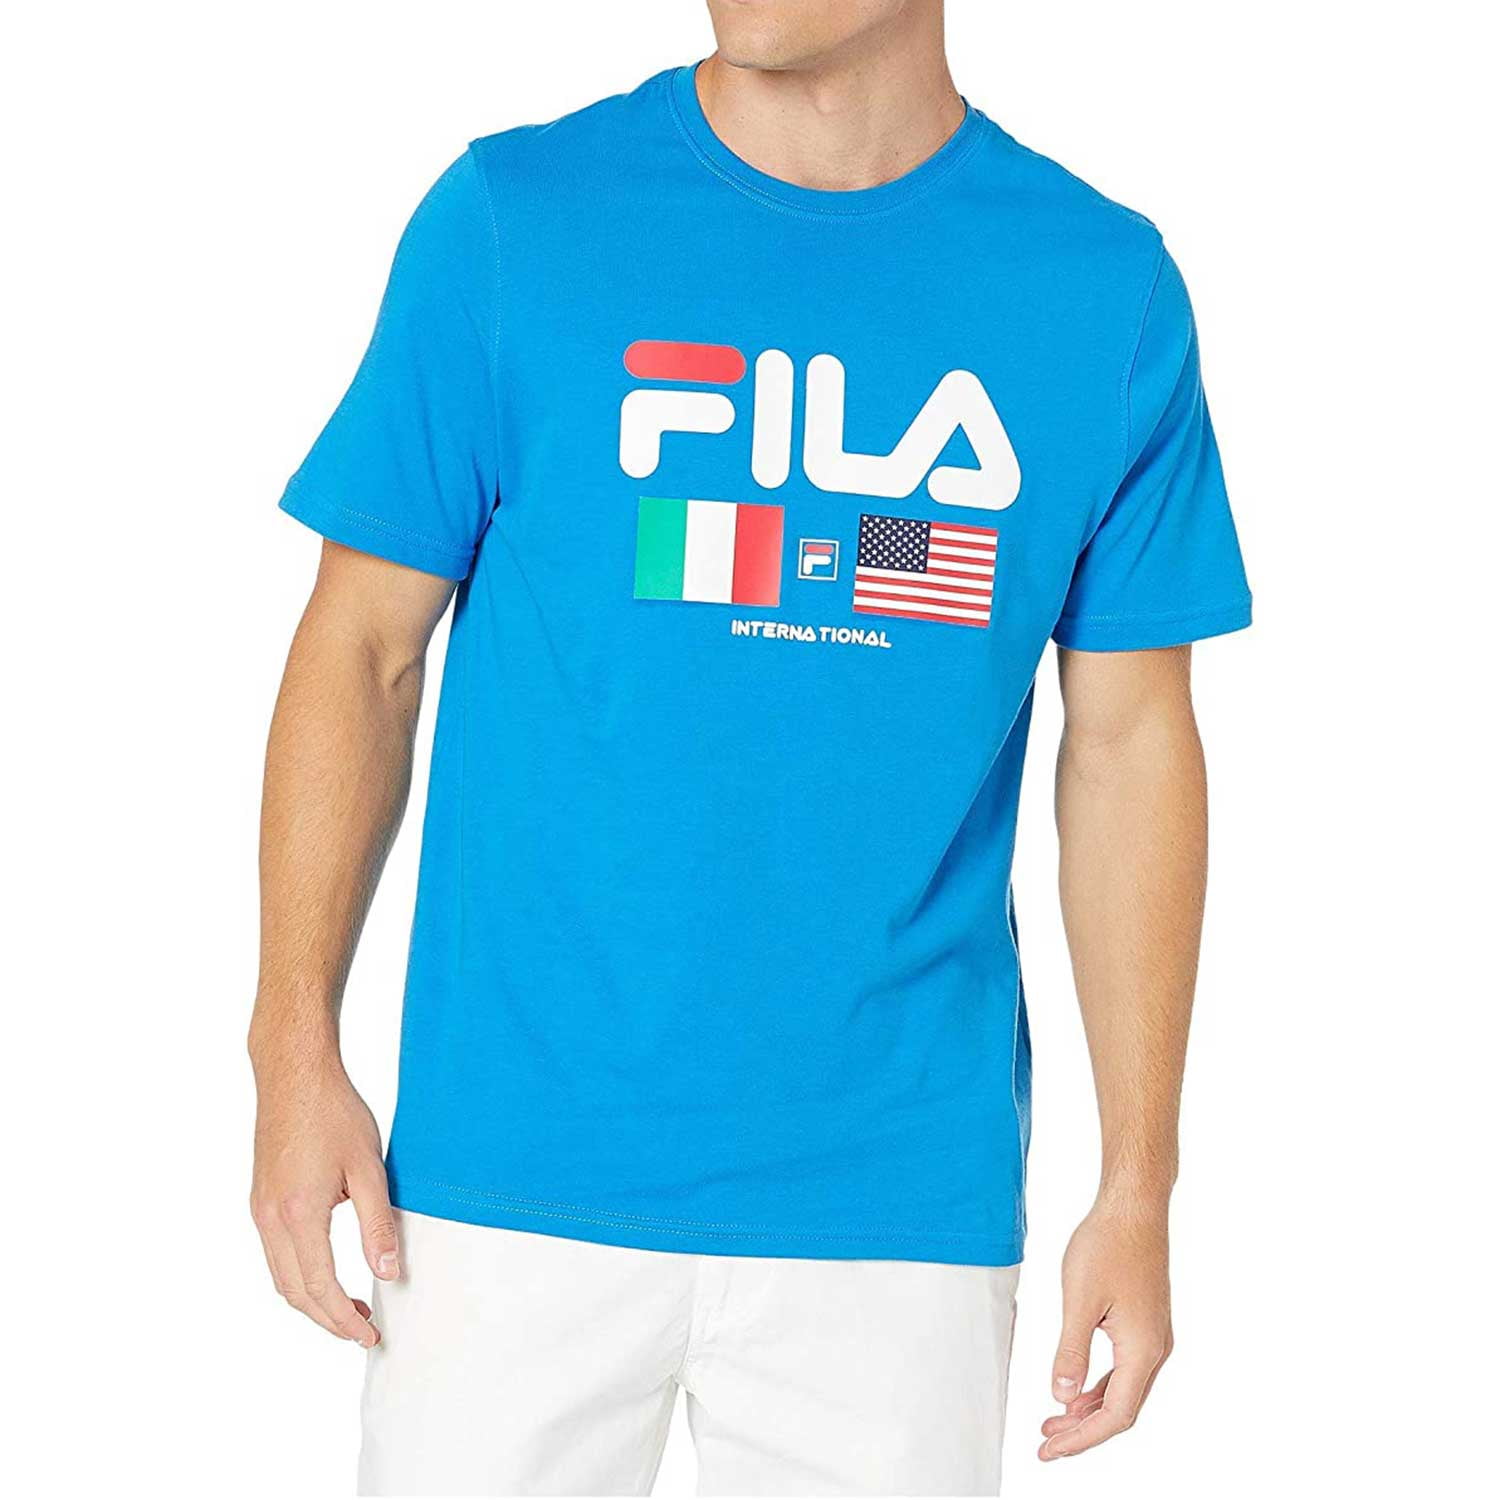 Rundt om virkelighed Far Fila International Men's T-Shirt Direct Blue lm913786-916 - Walmart.com